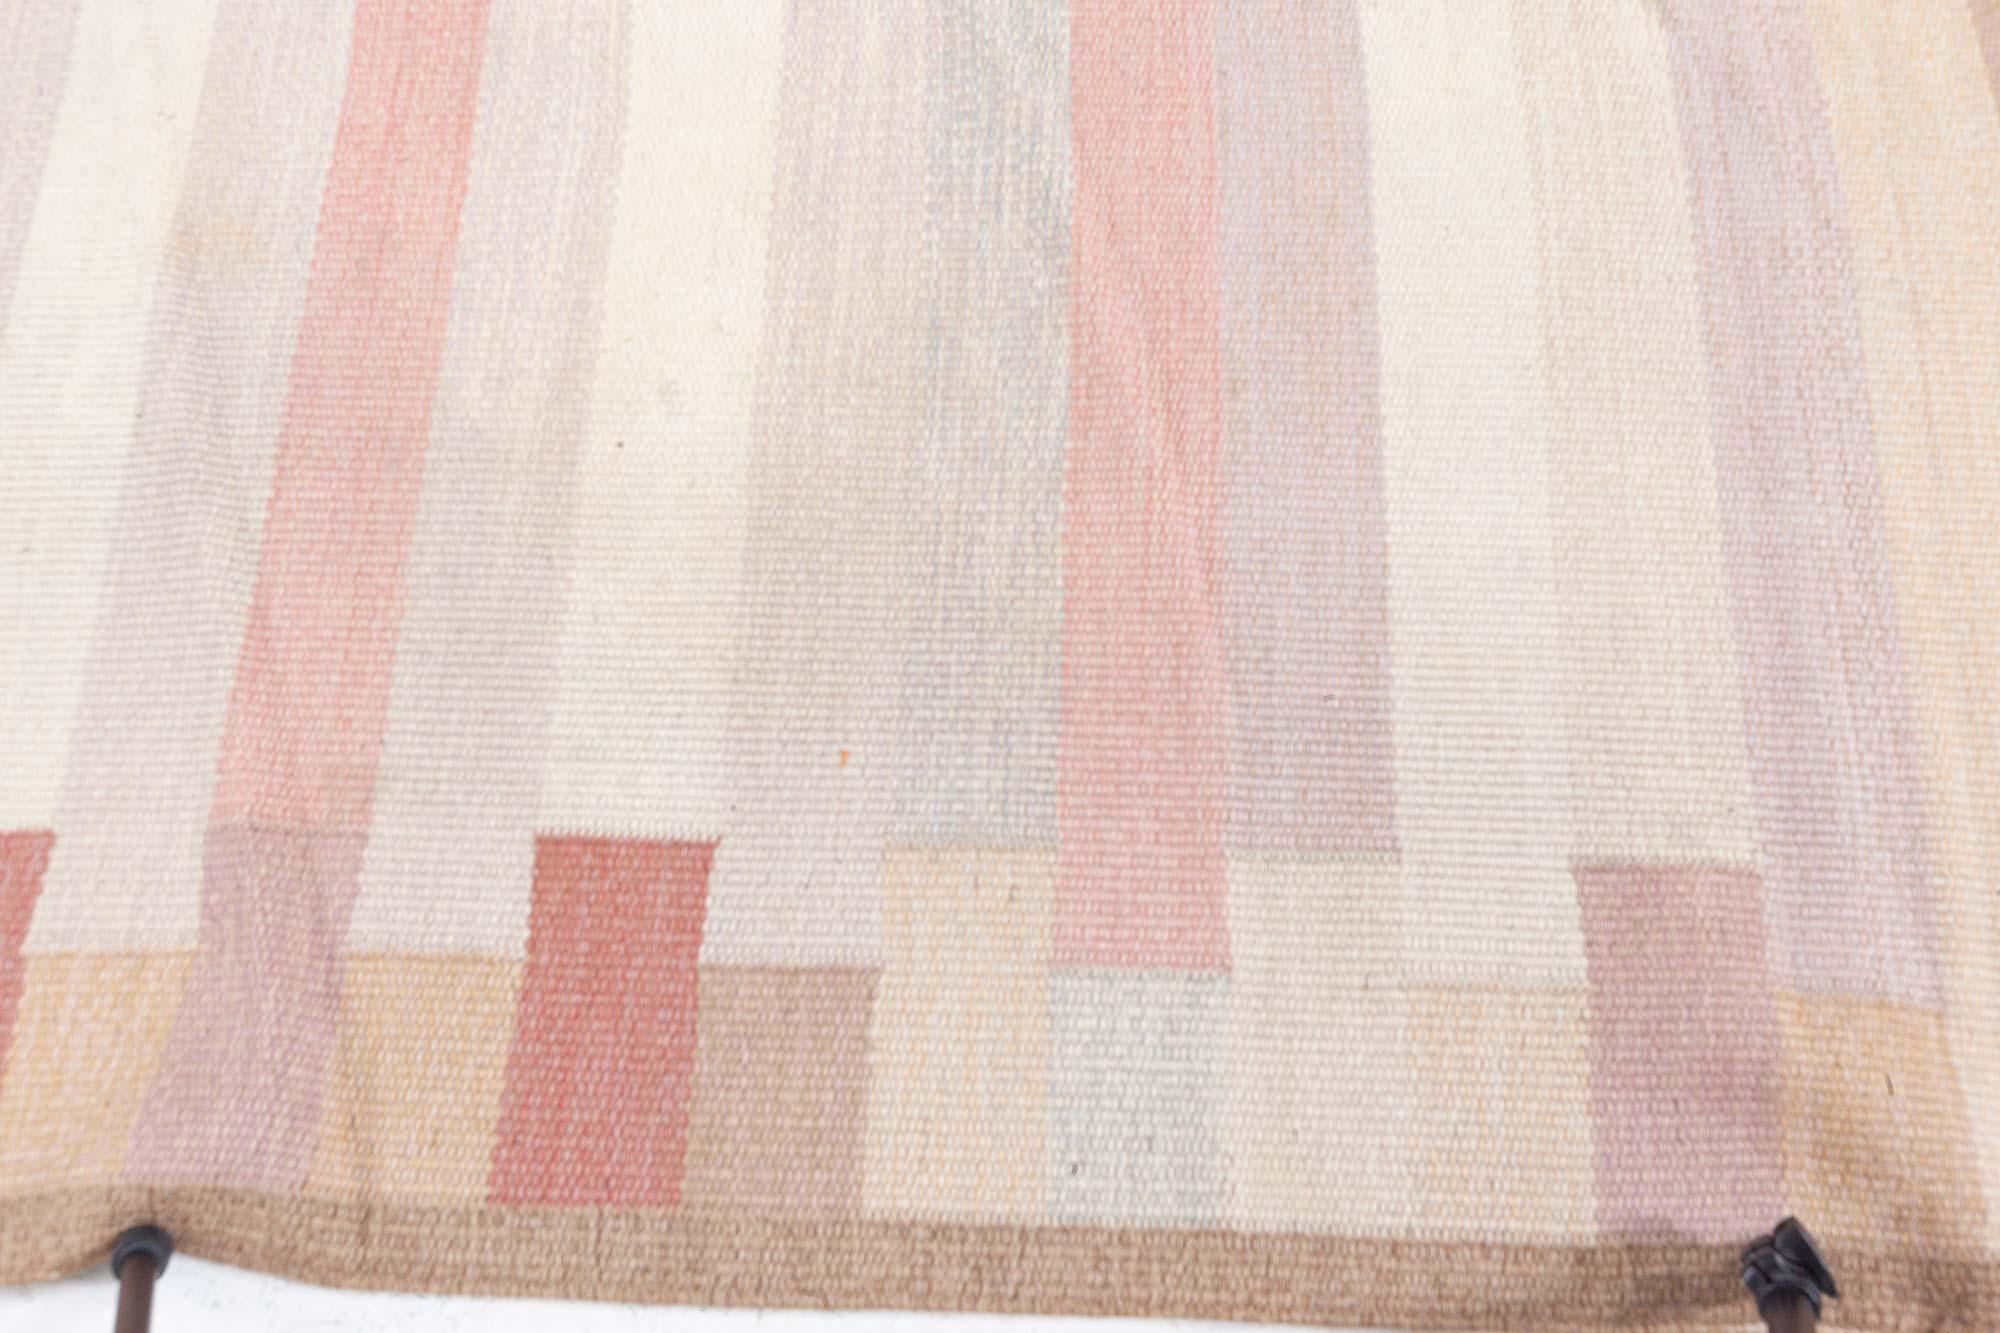 Mid-20th century Swedish flat-weave rug
Size: 5'5